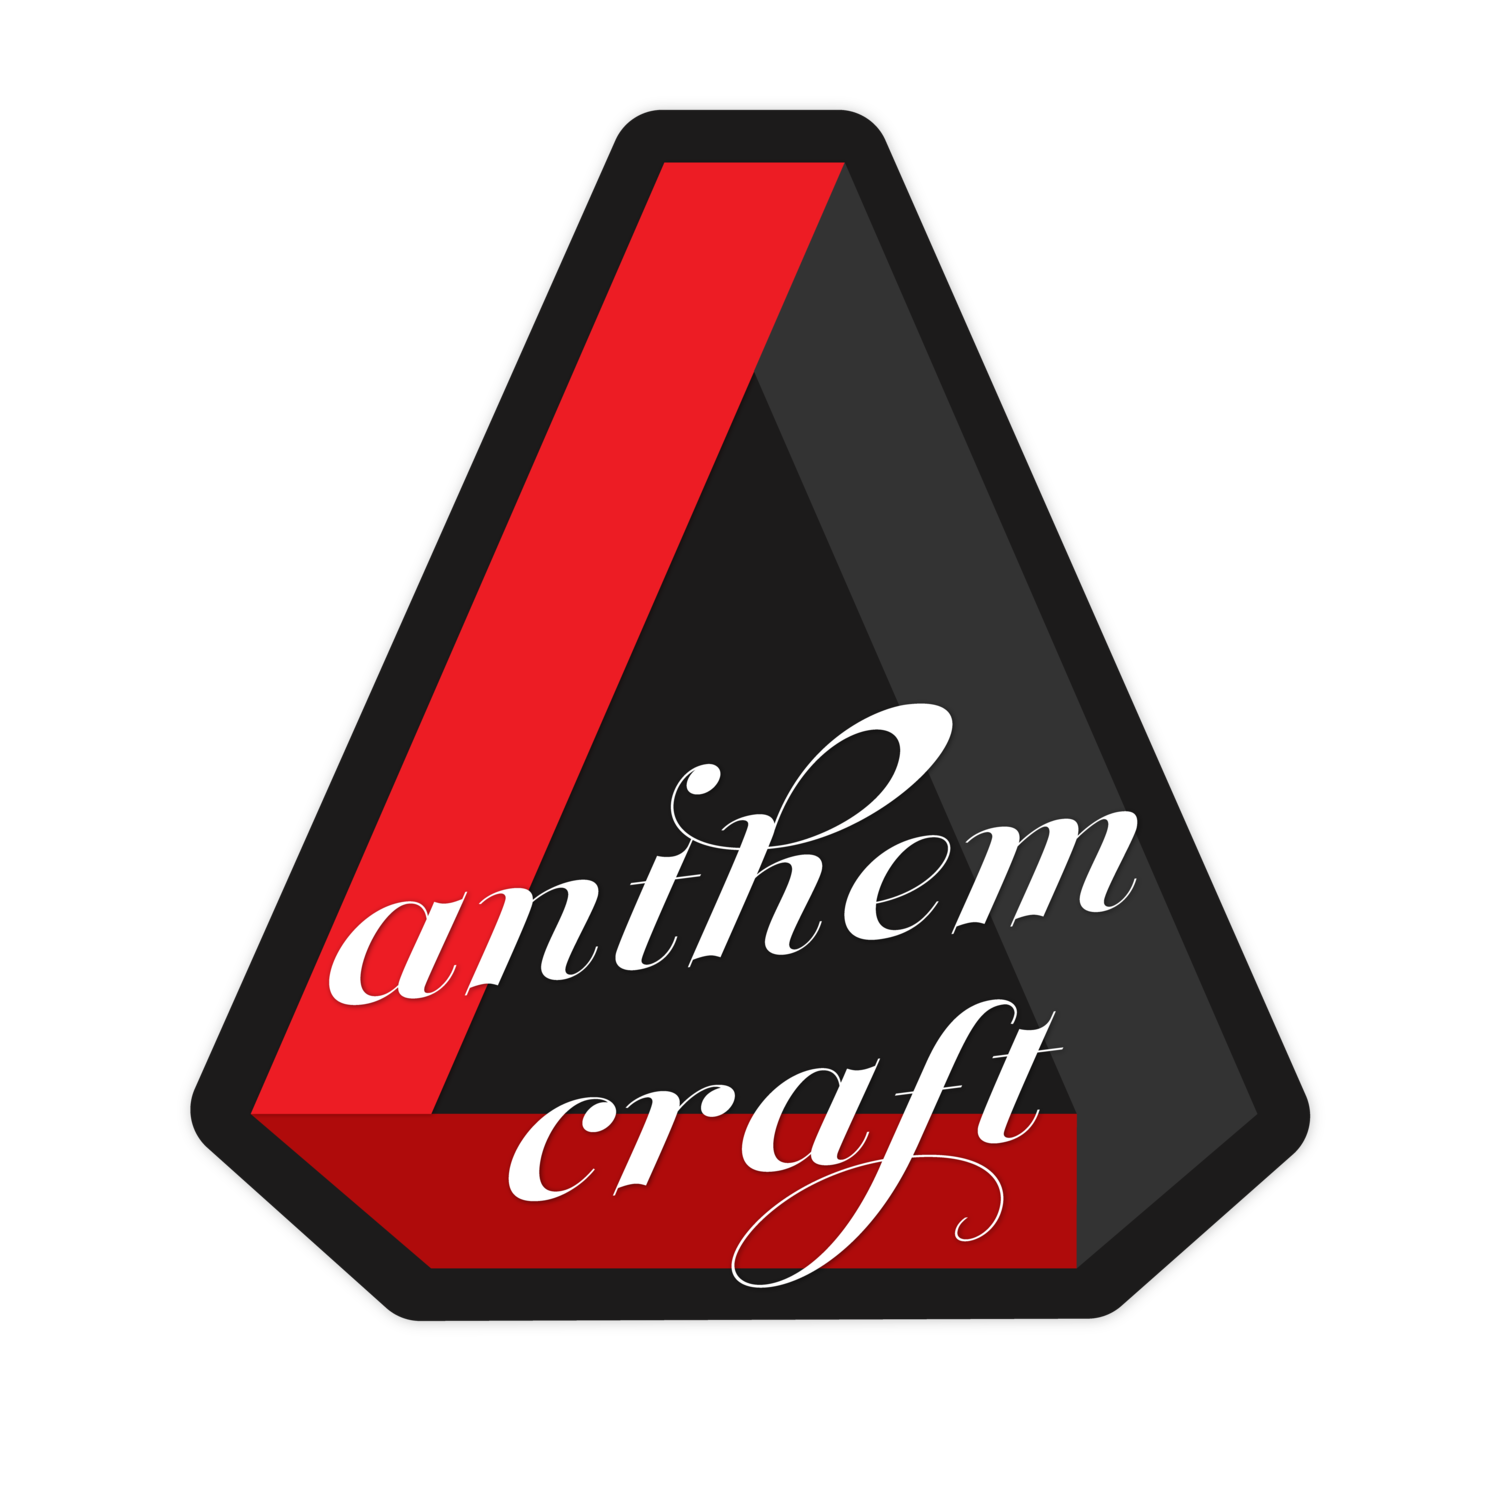 Anthem Craft Co.